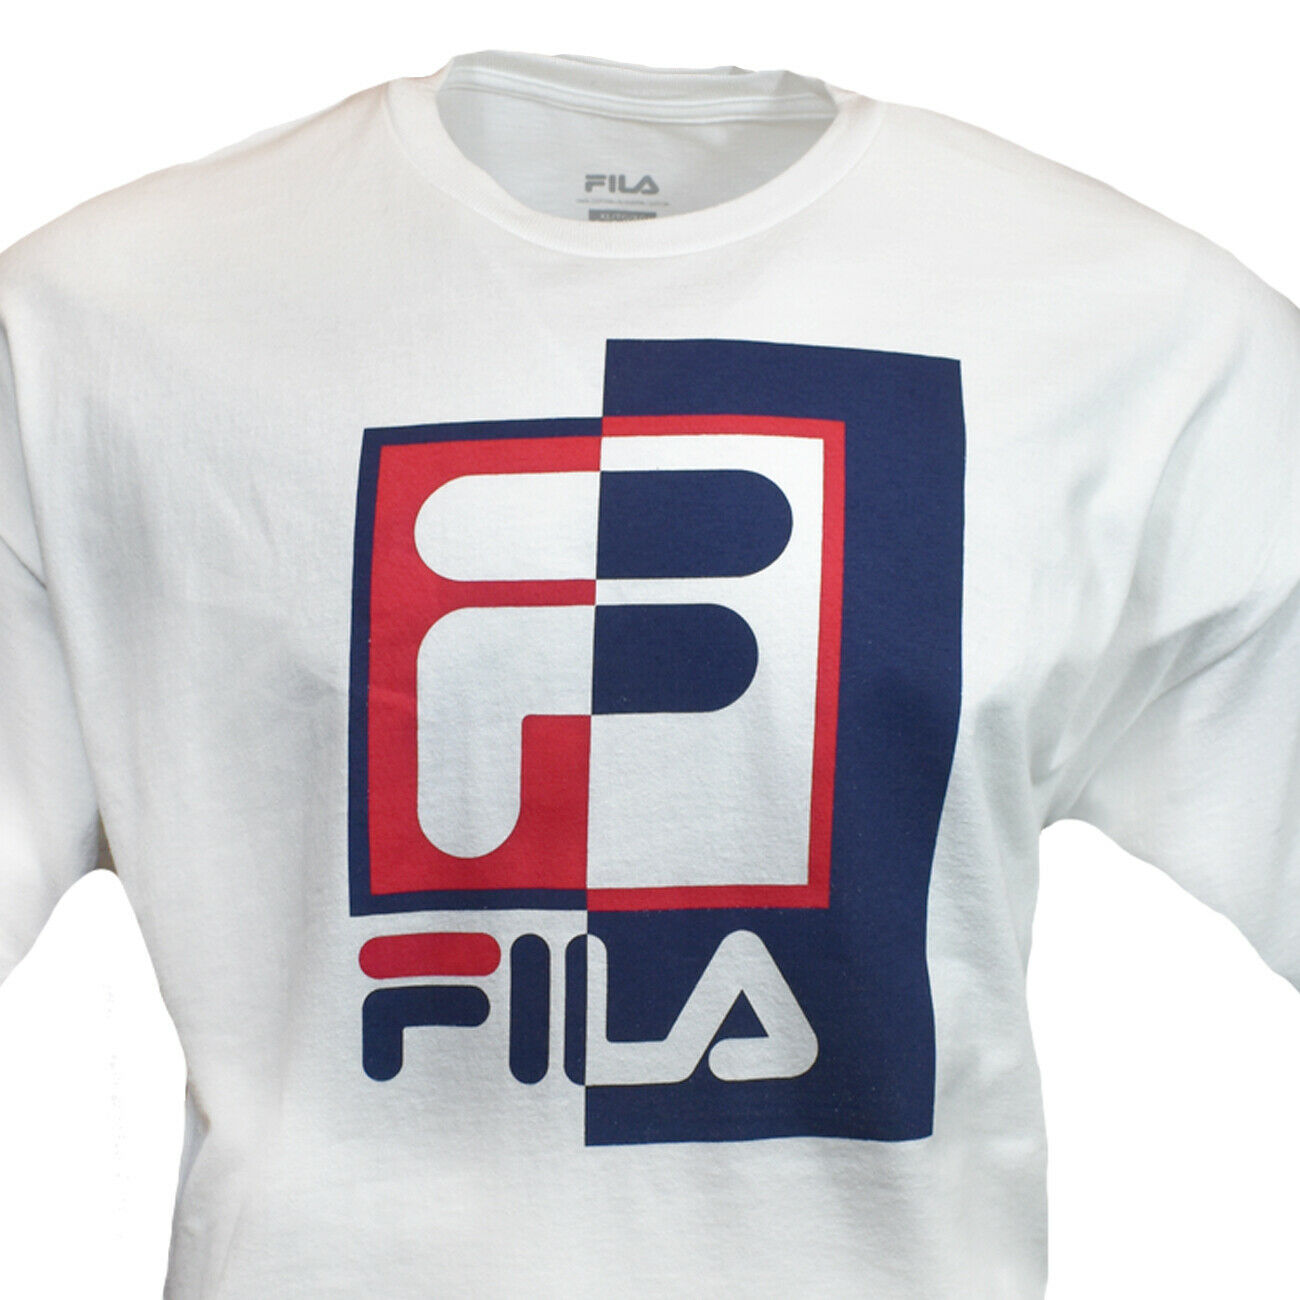 FILA Men's Retro Squared T-shirt, White with & – MB